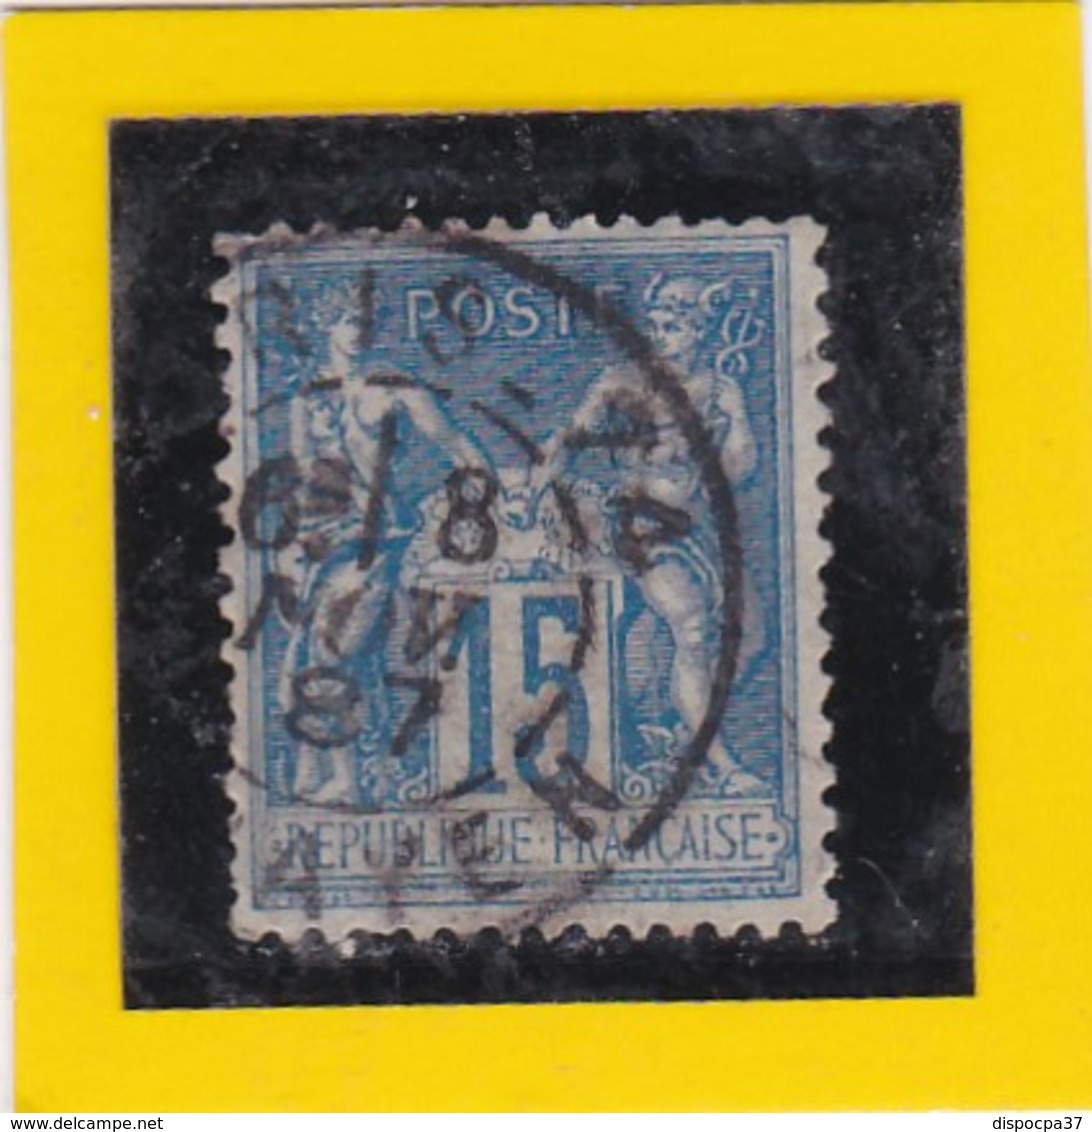 N° 90a  TYPE IIc  état 1   + CACHET A DATE  PARIS 74   - REF 24-24 - 1876-1898 Sage (Type II)